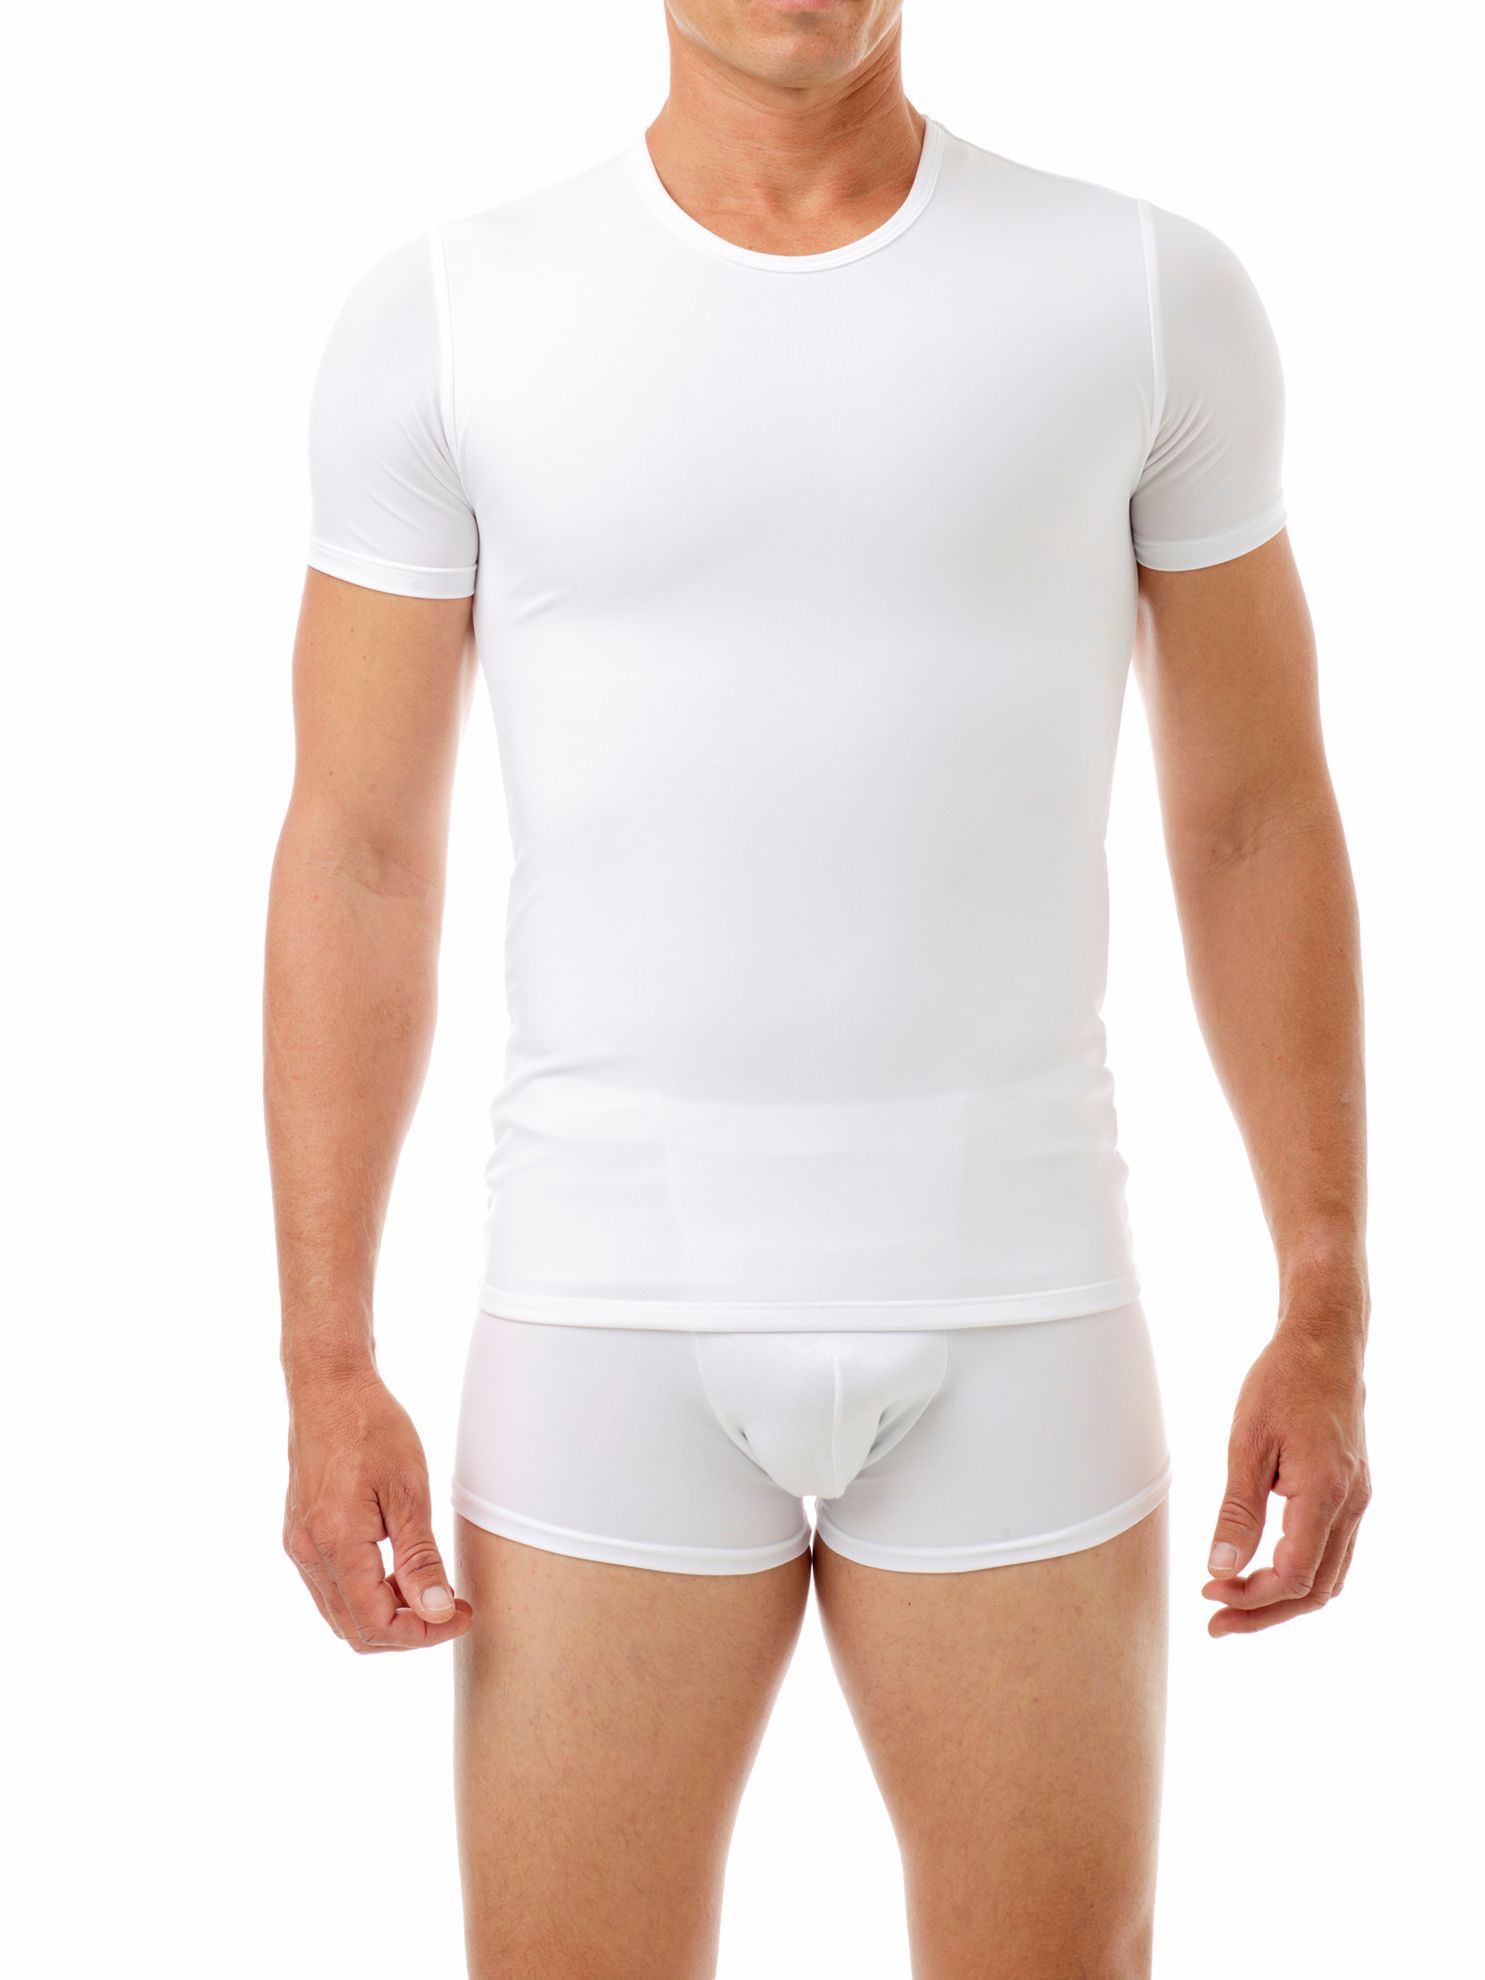 Post Partum Girdle. Men Compression Shirts, Girdles, Chest Binders, Hernia  Garments